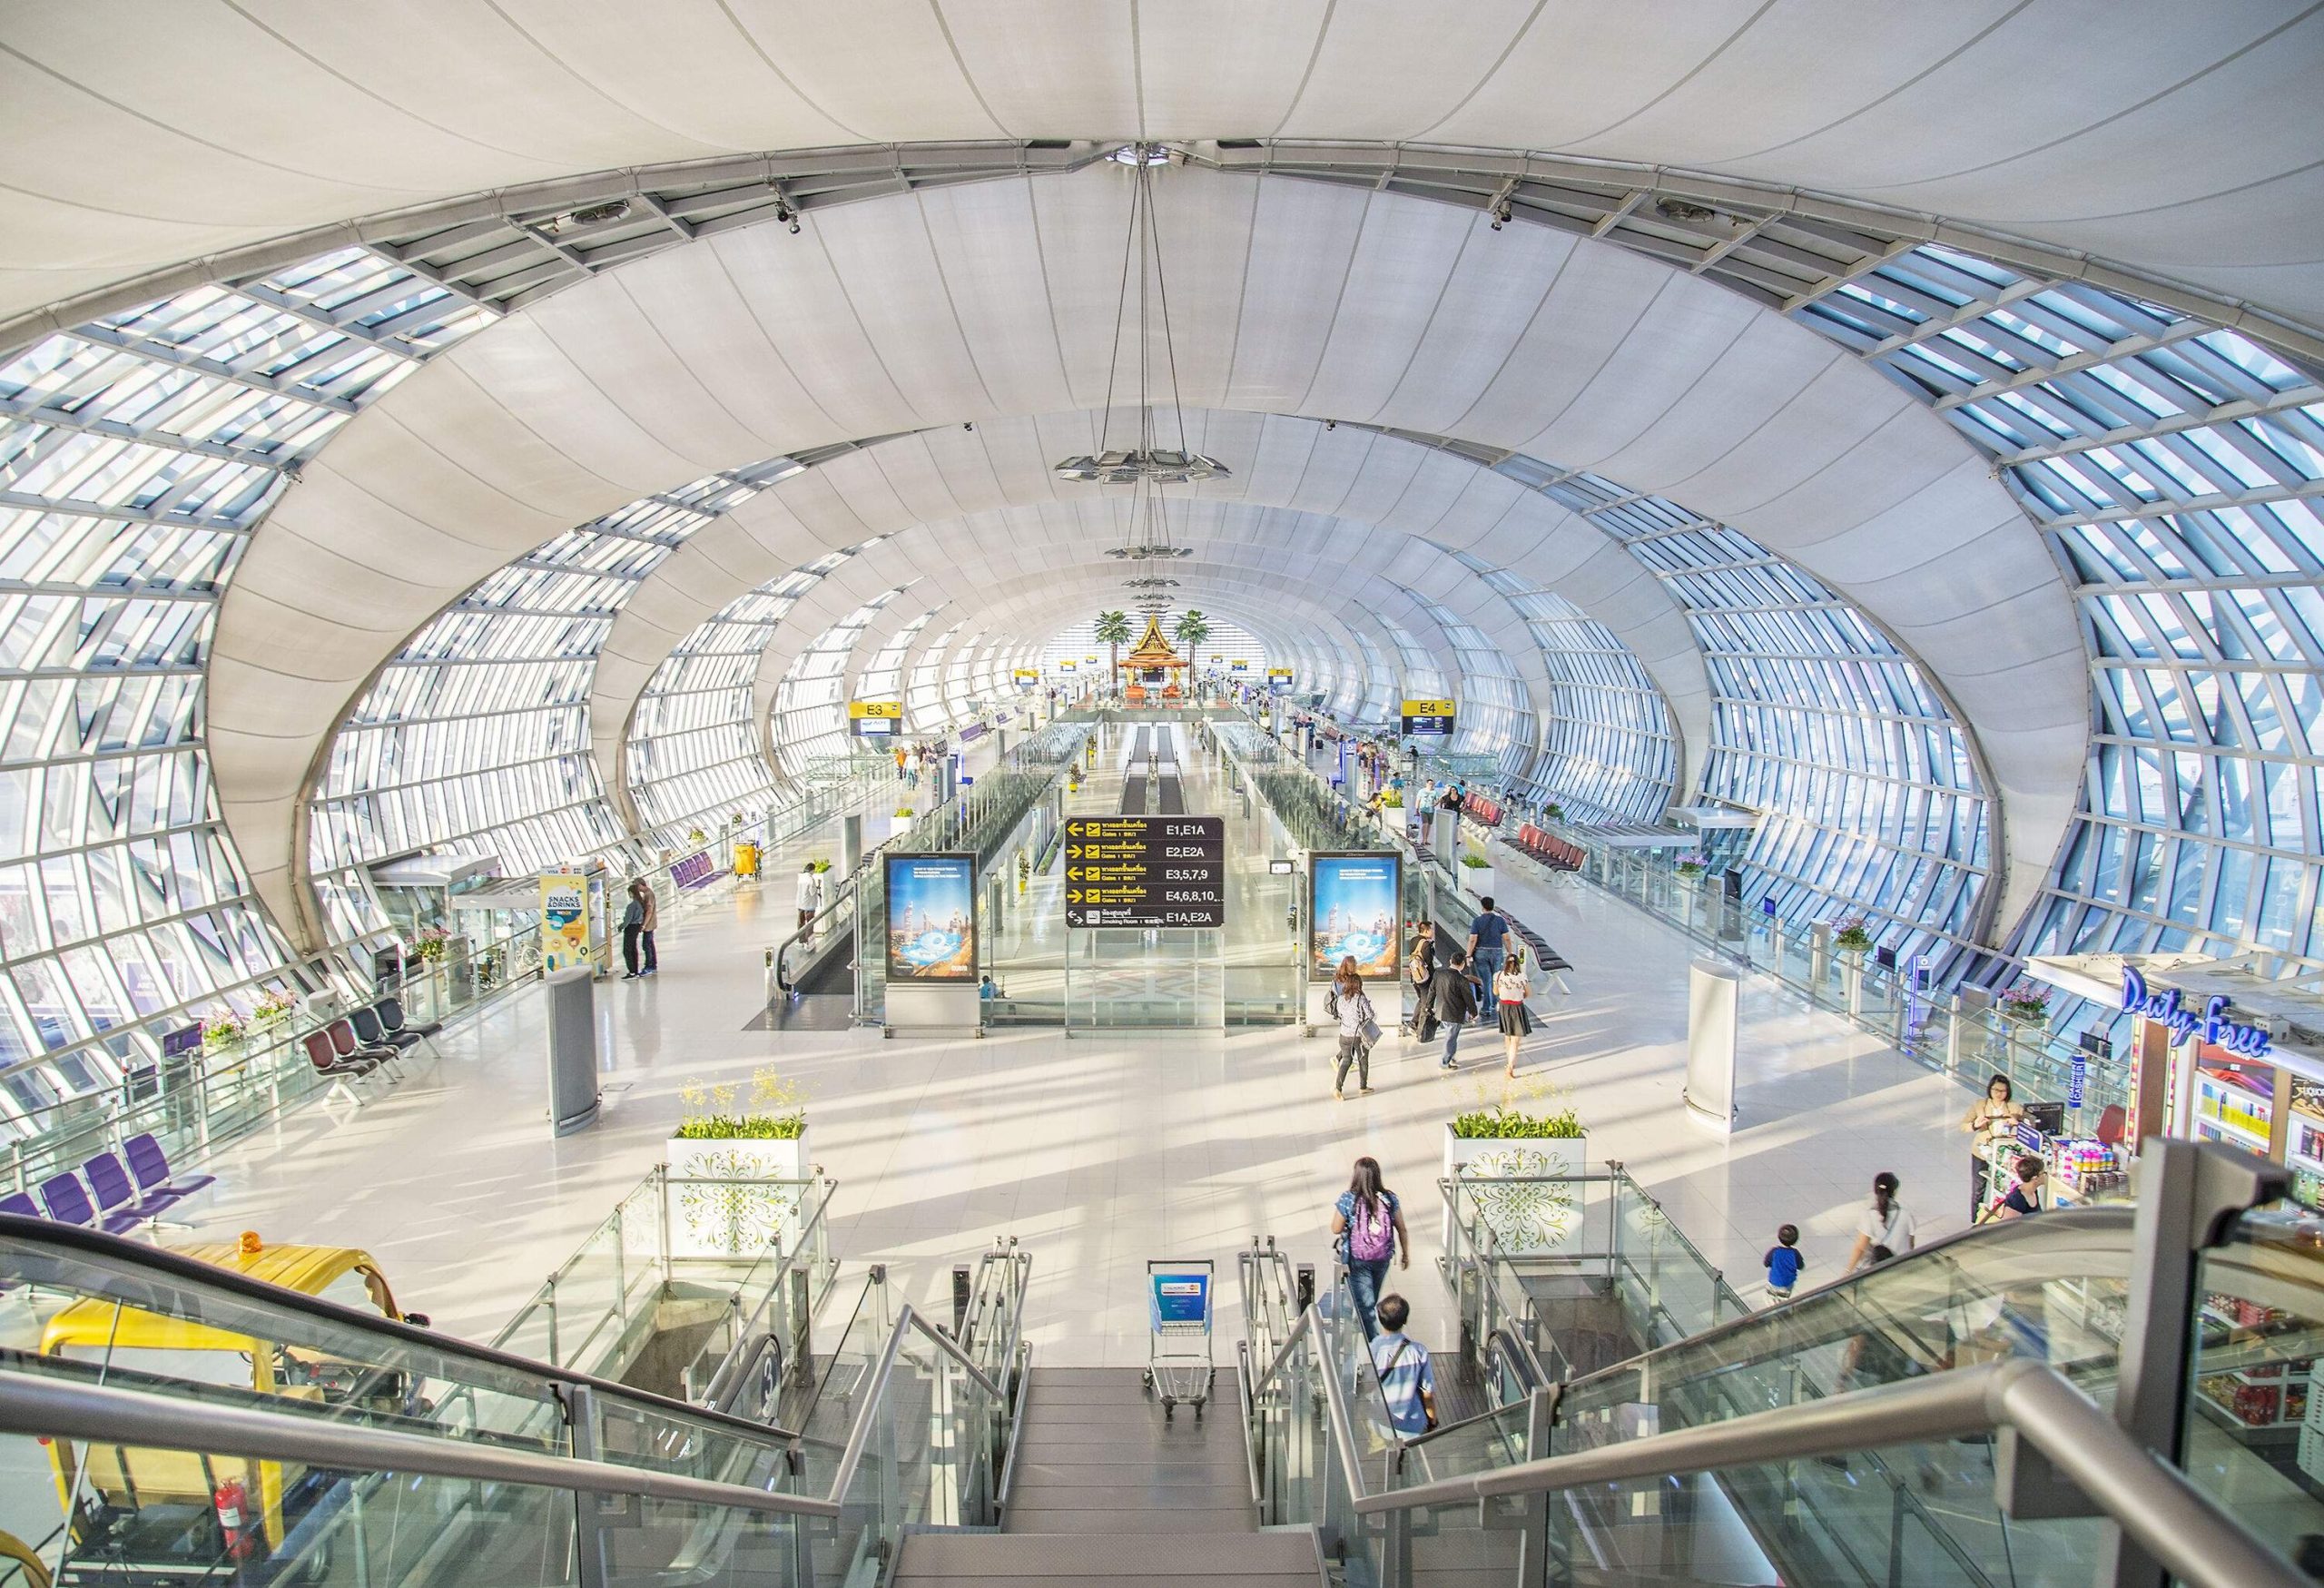 A descending escalator inside an airport terminal with glass walls.